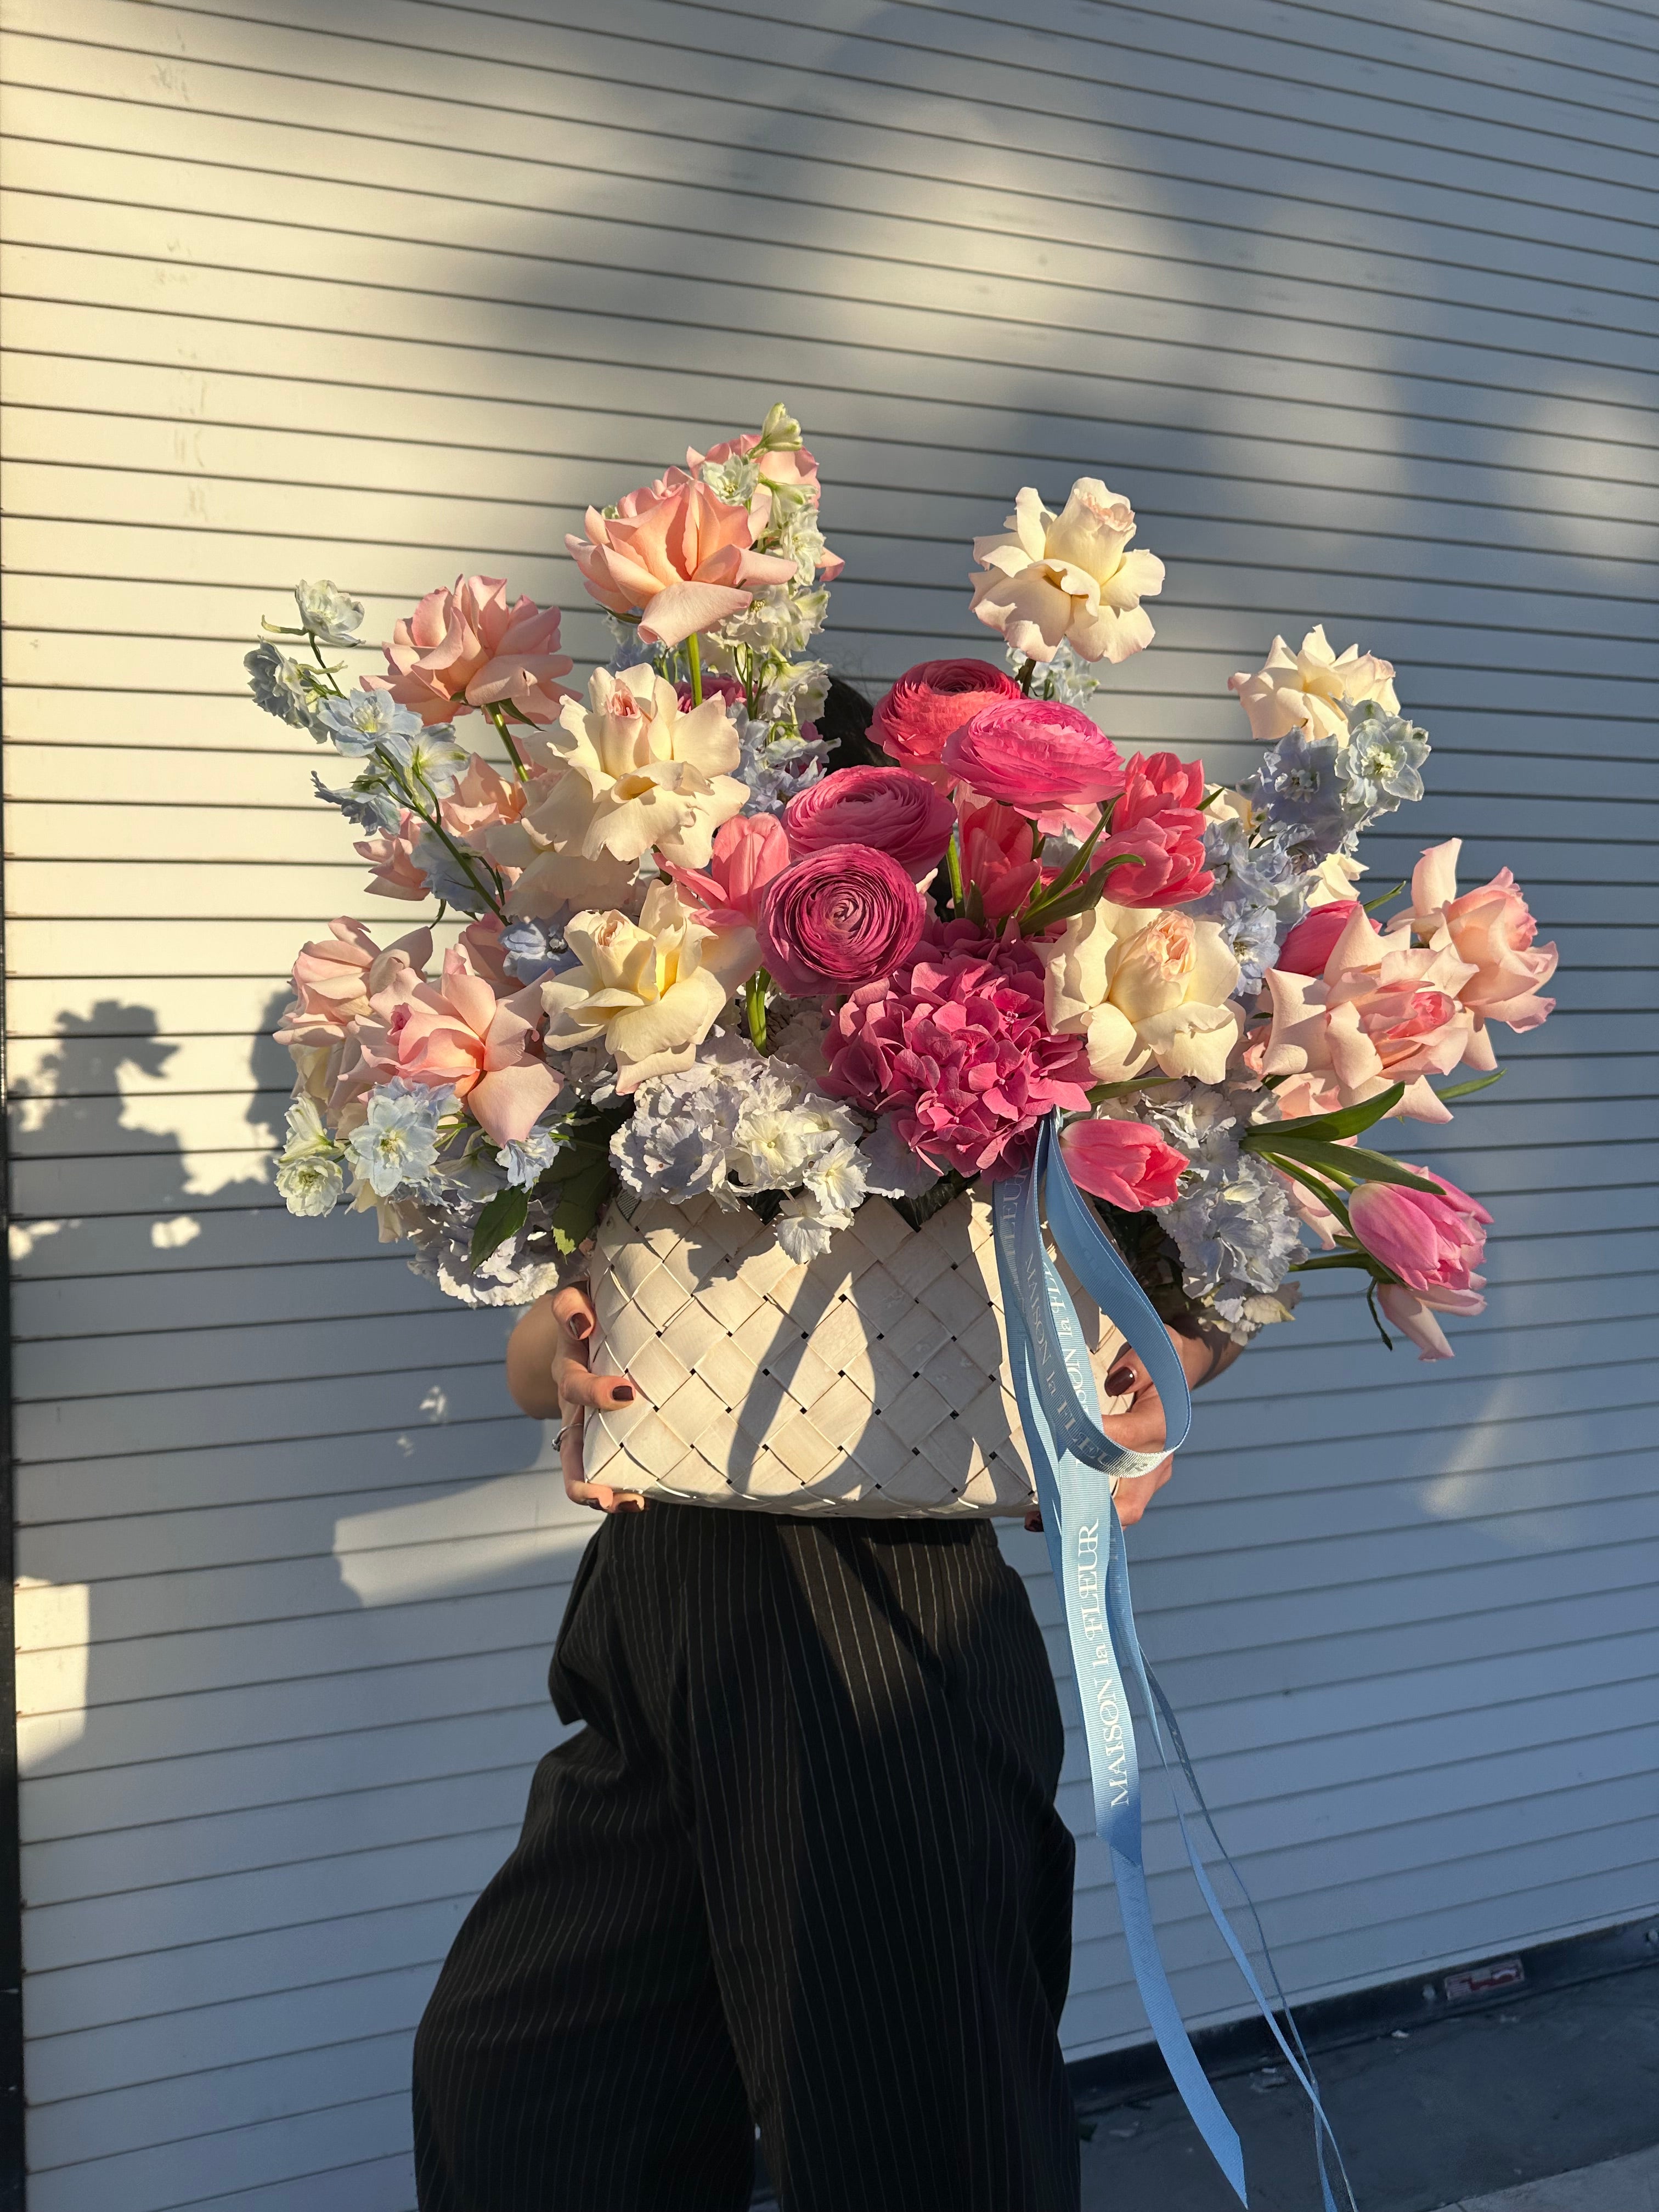 Oui Madam! - Flower arrangement in Bottega style basket